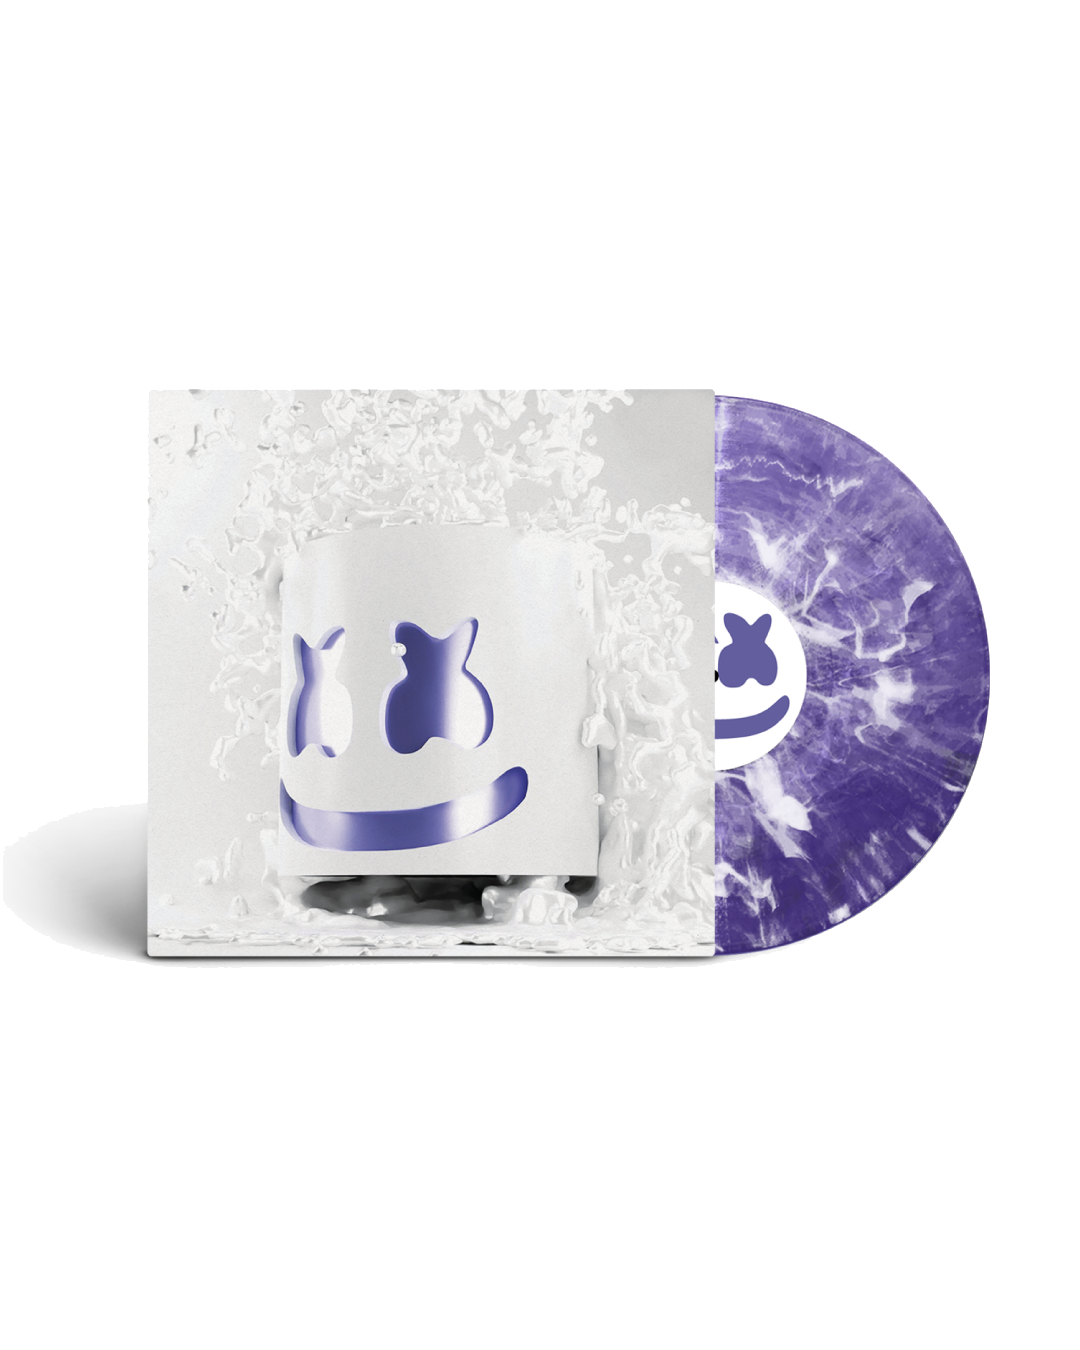 Marshmello "Shockwave" 1xLP [Exclusive Purple Swirl Vinyl]